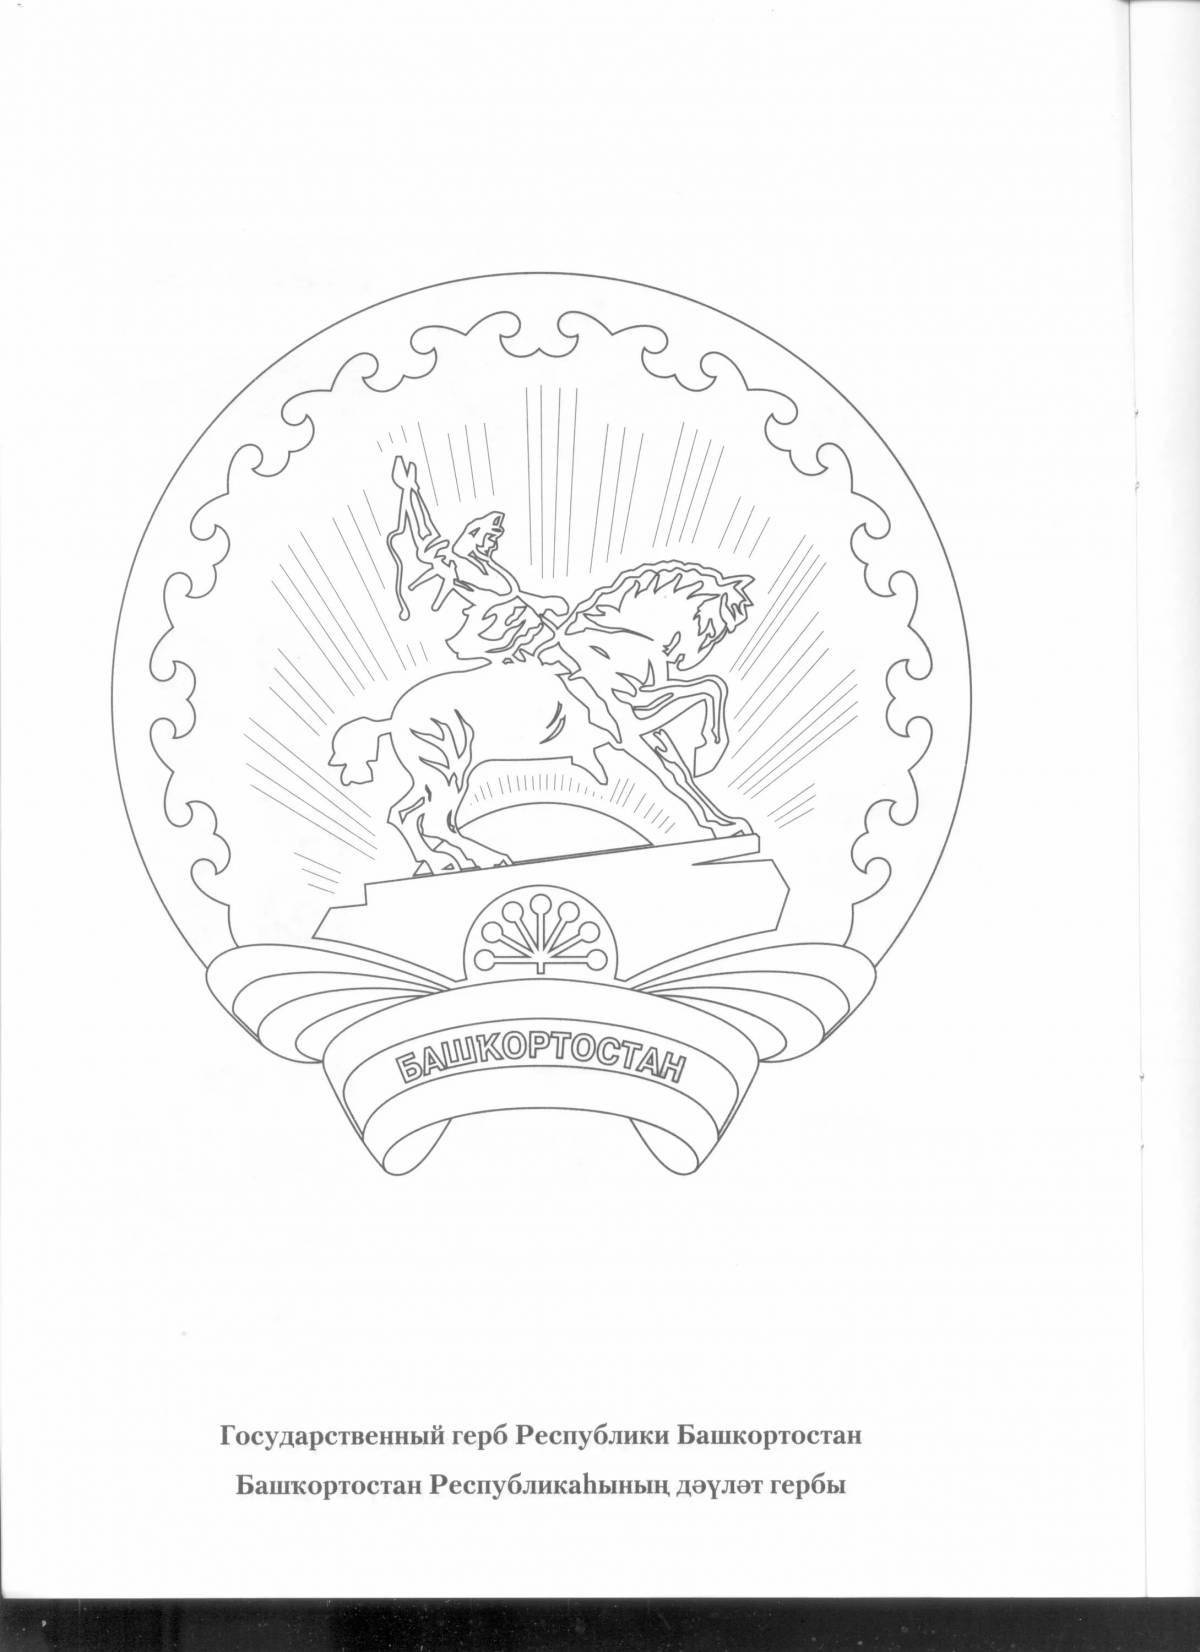 Impressive coat of arms of Russia for preschoolers